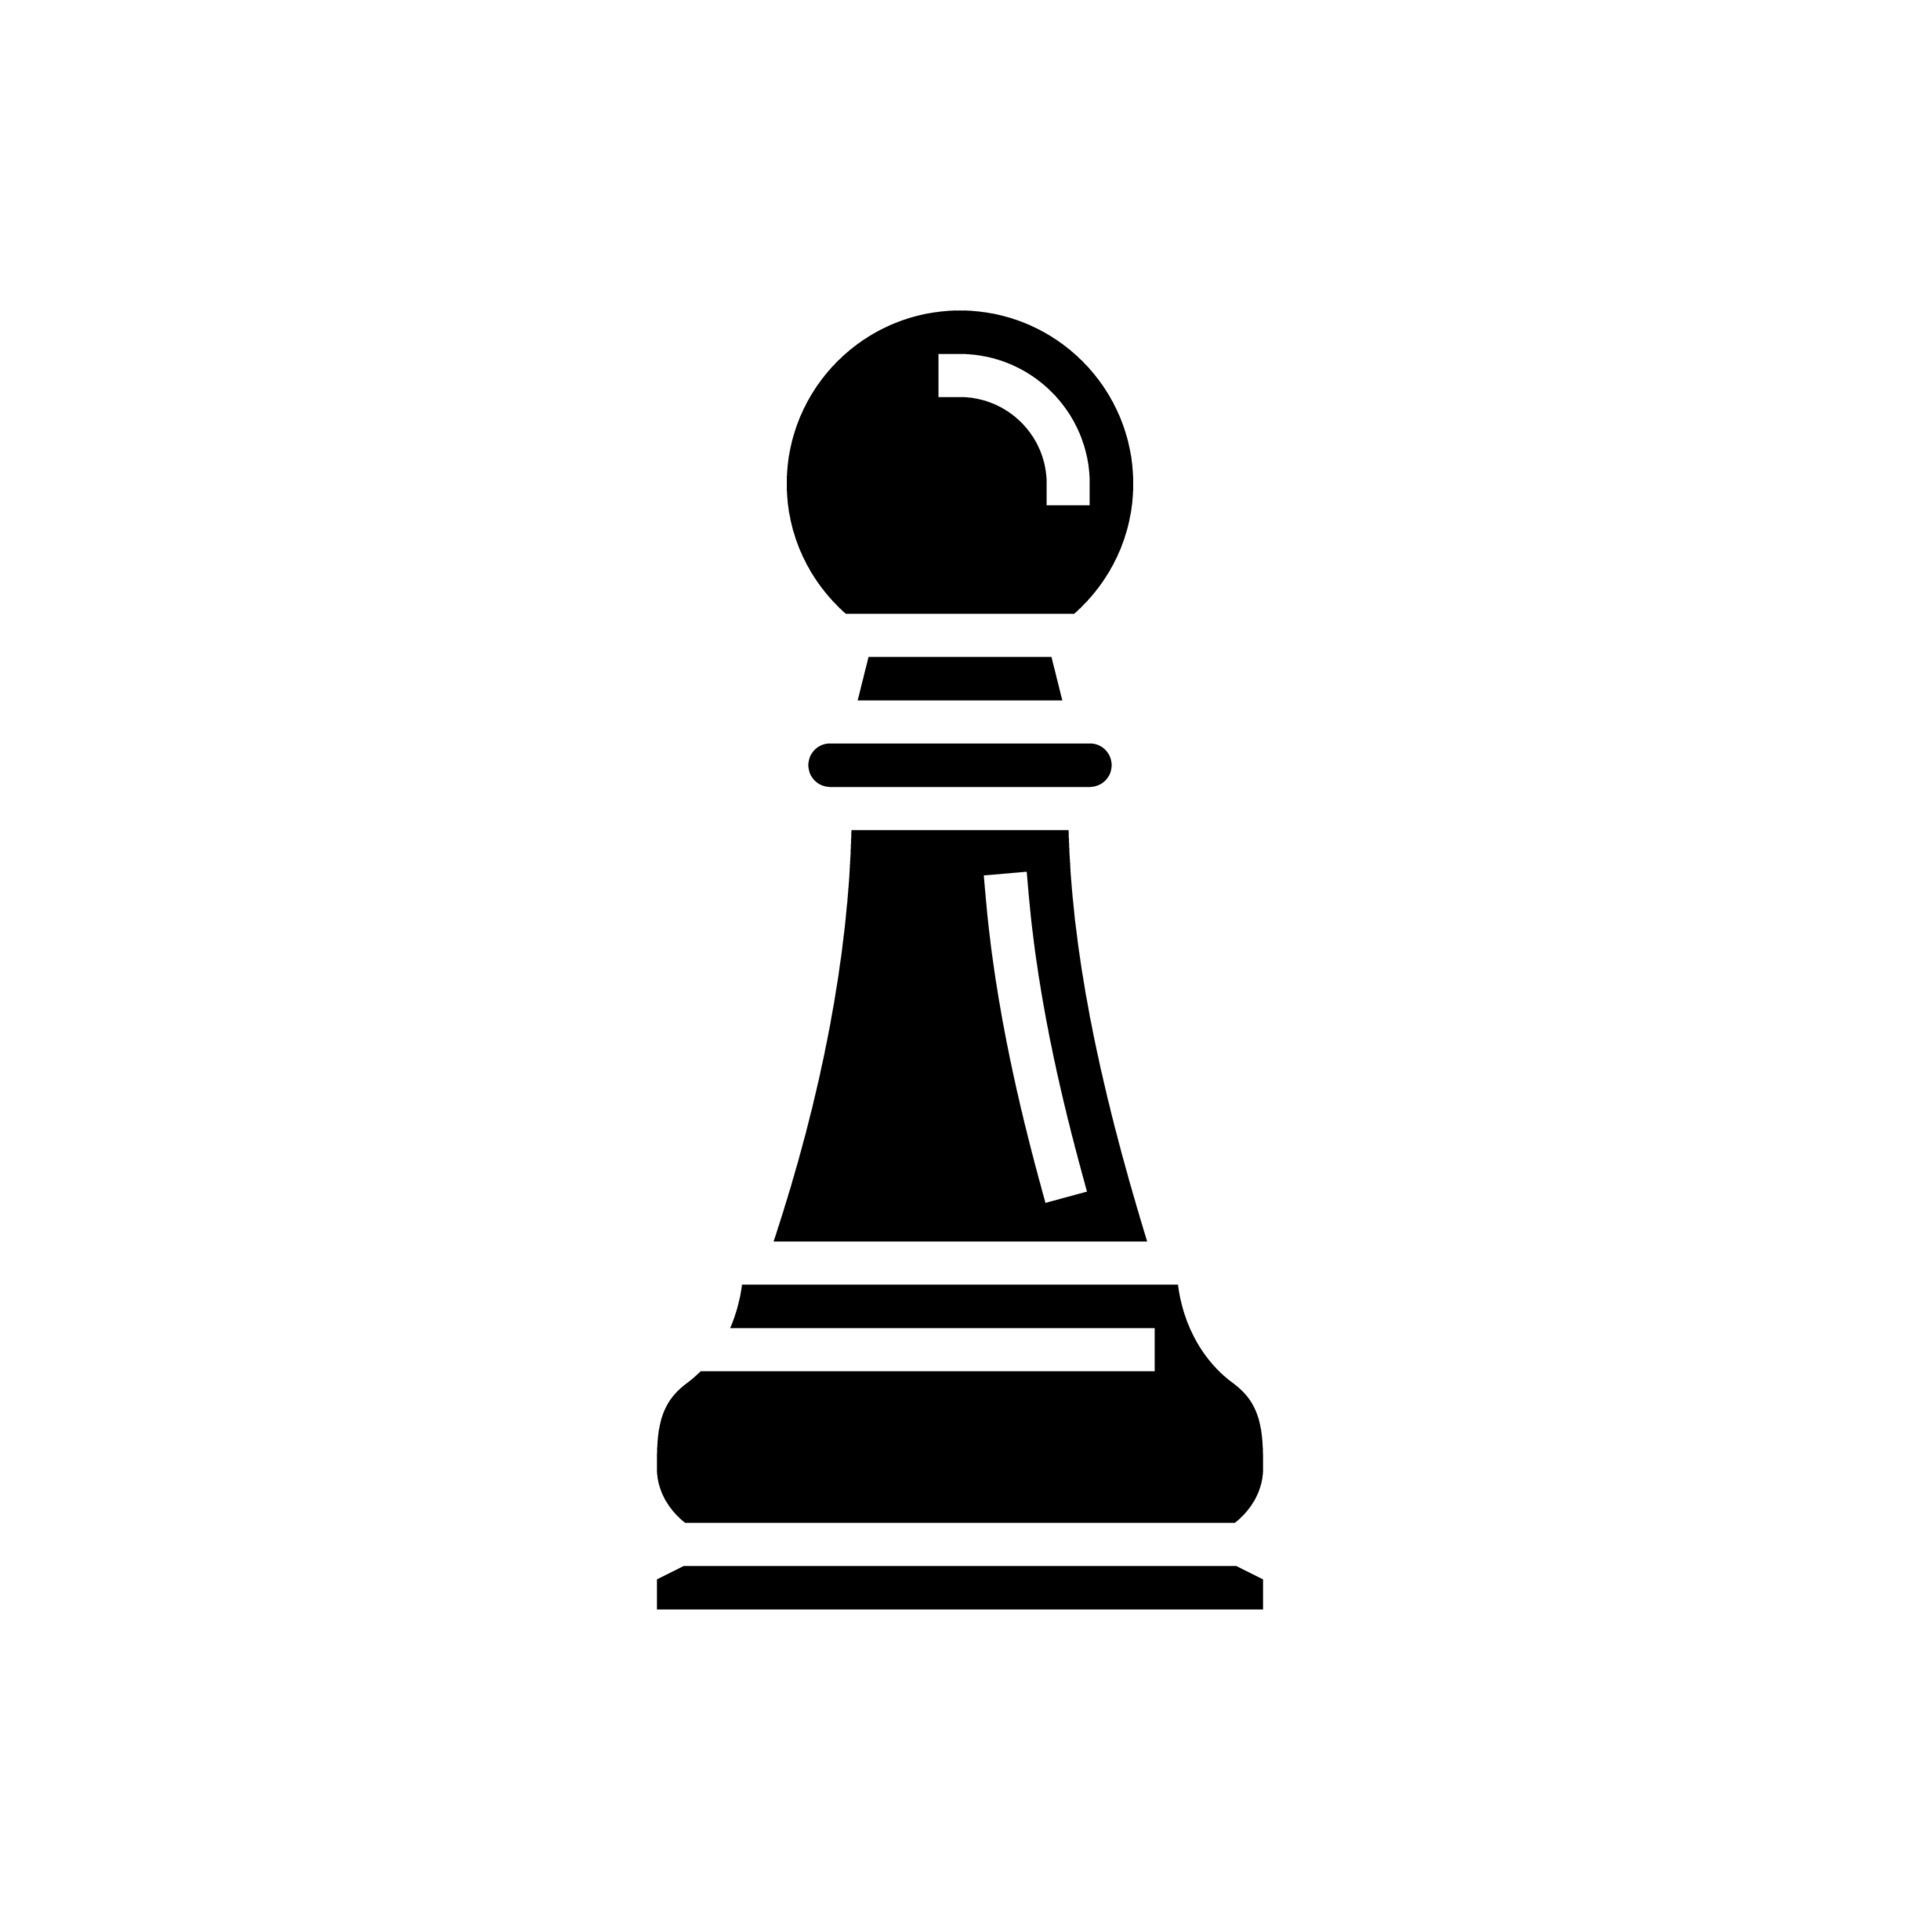 ícone de elemento de peão de xadrez, estilo de estrutura de tópicos  15182420 Vetor no Vecteezy